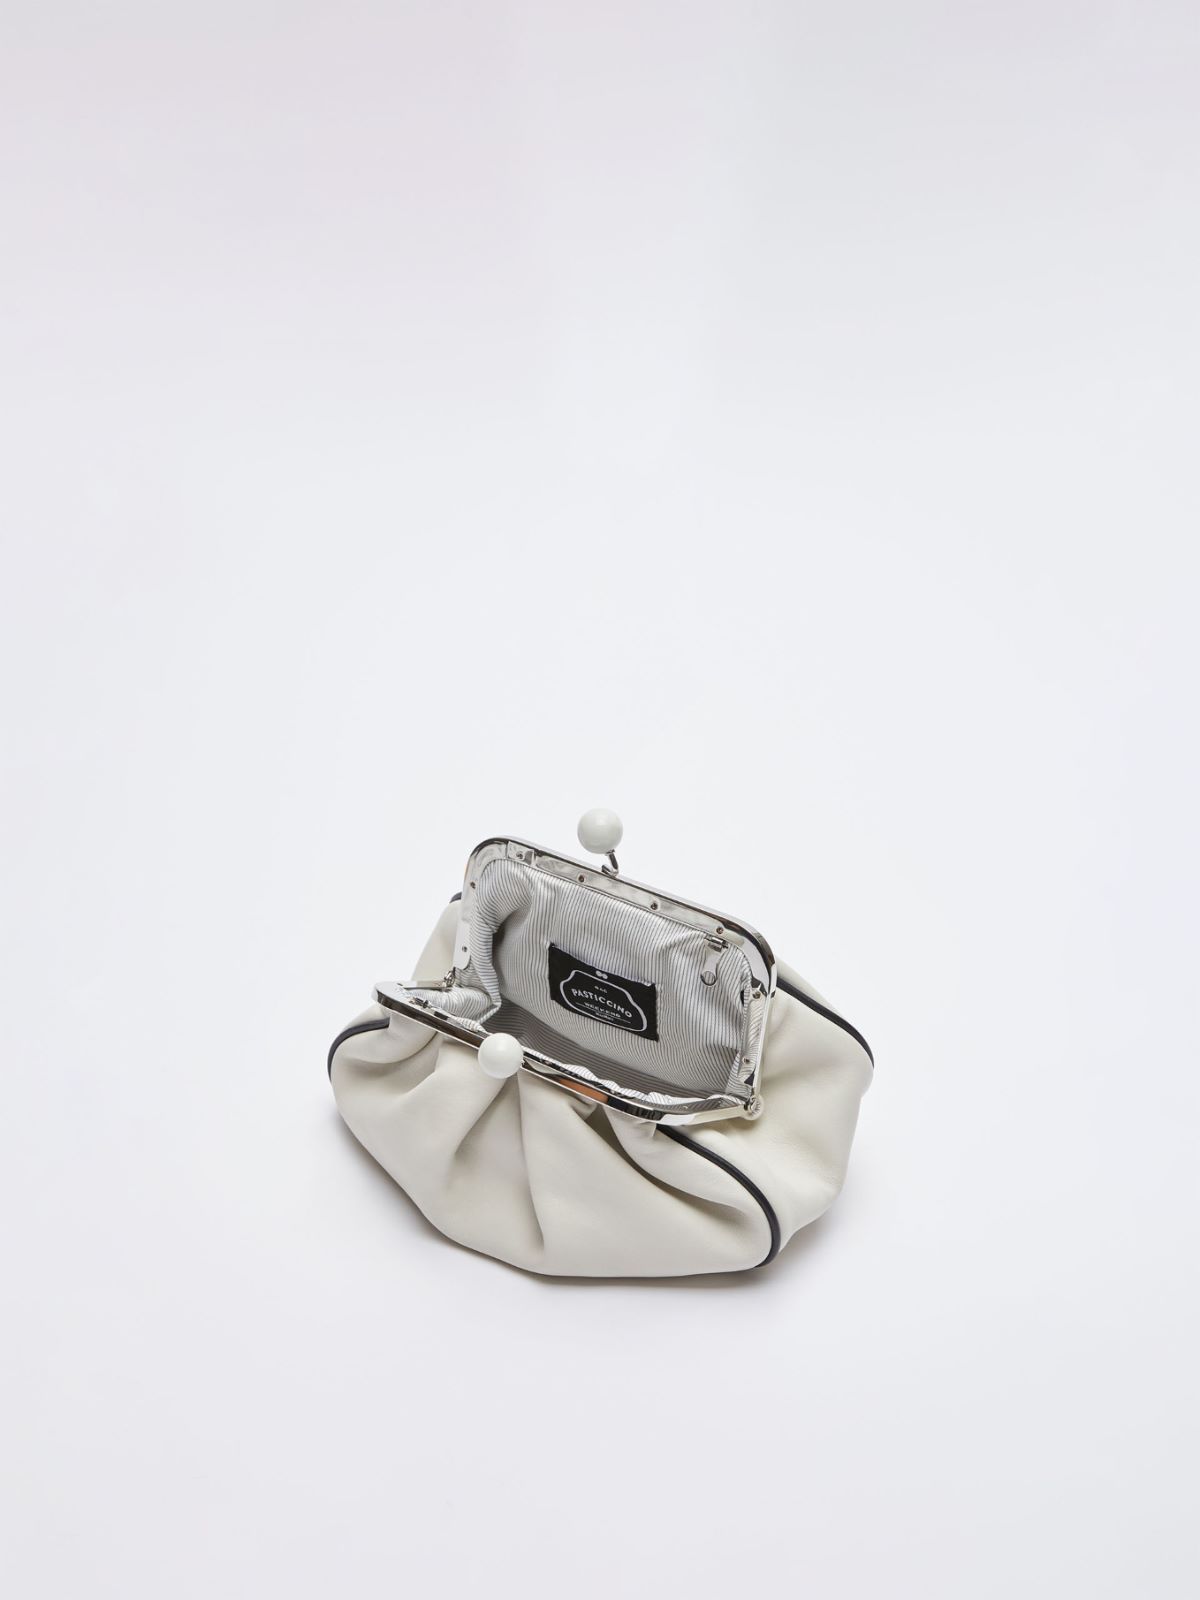 Small Pasticcino Bag in nappa leather - MILK - Weekend Max Mara - 4